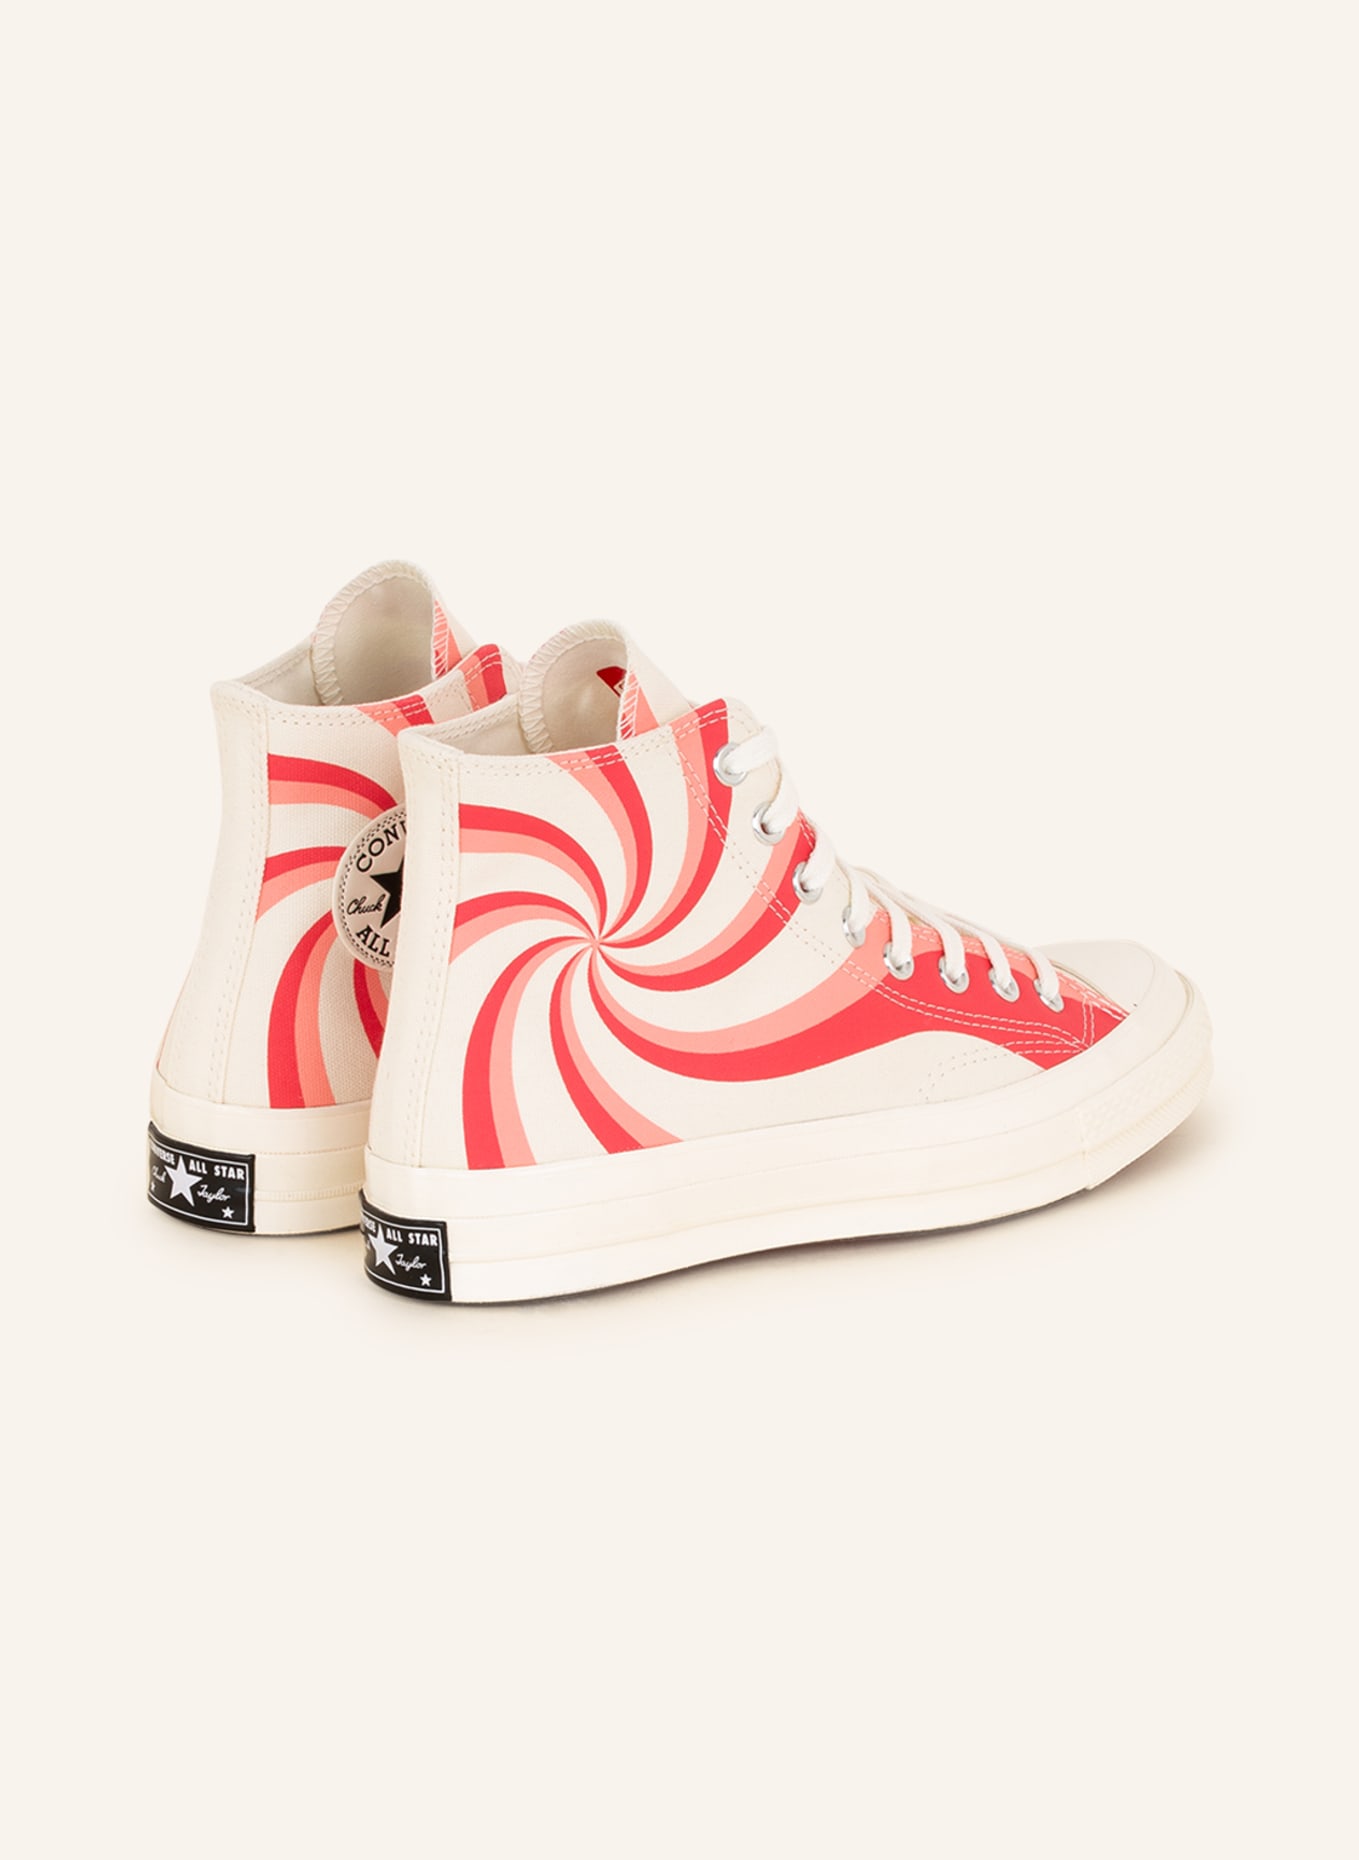 CONVERSE Hightop-Sneaker CHUCK 70, Farbe: CREME/ PINK (Bild 2)